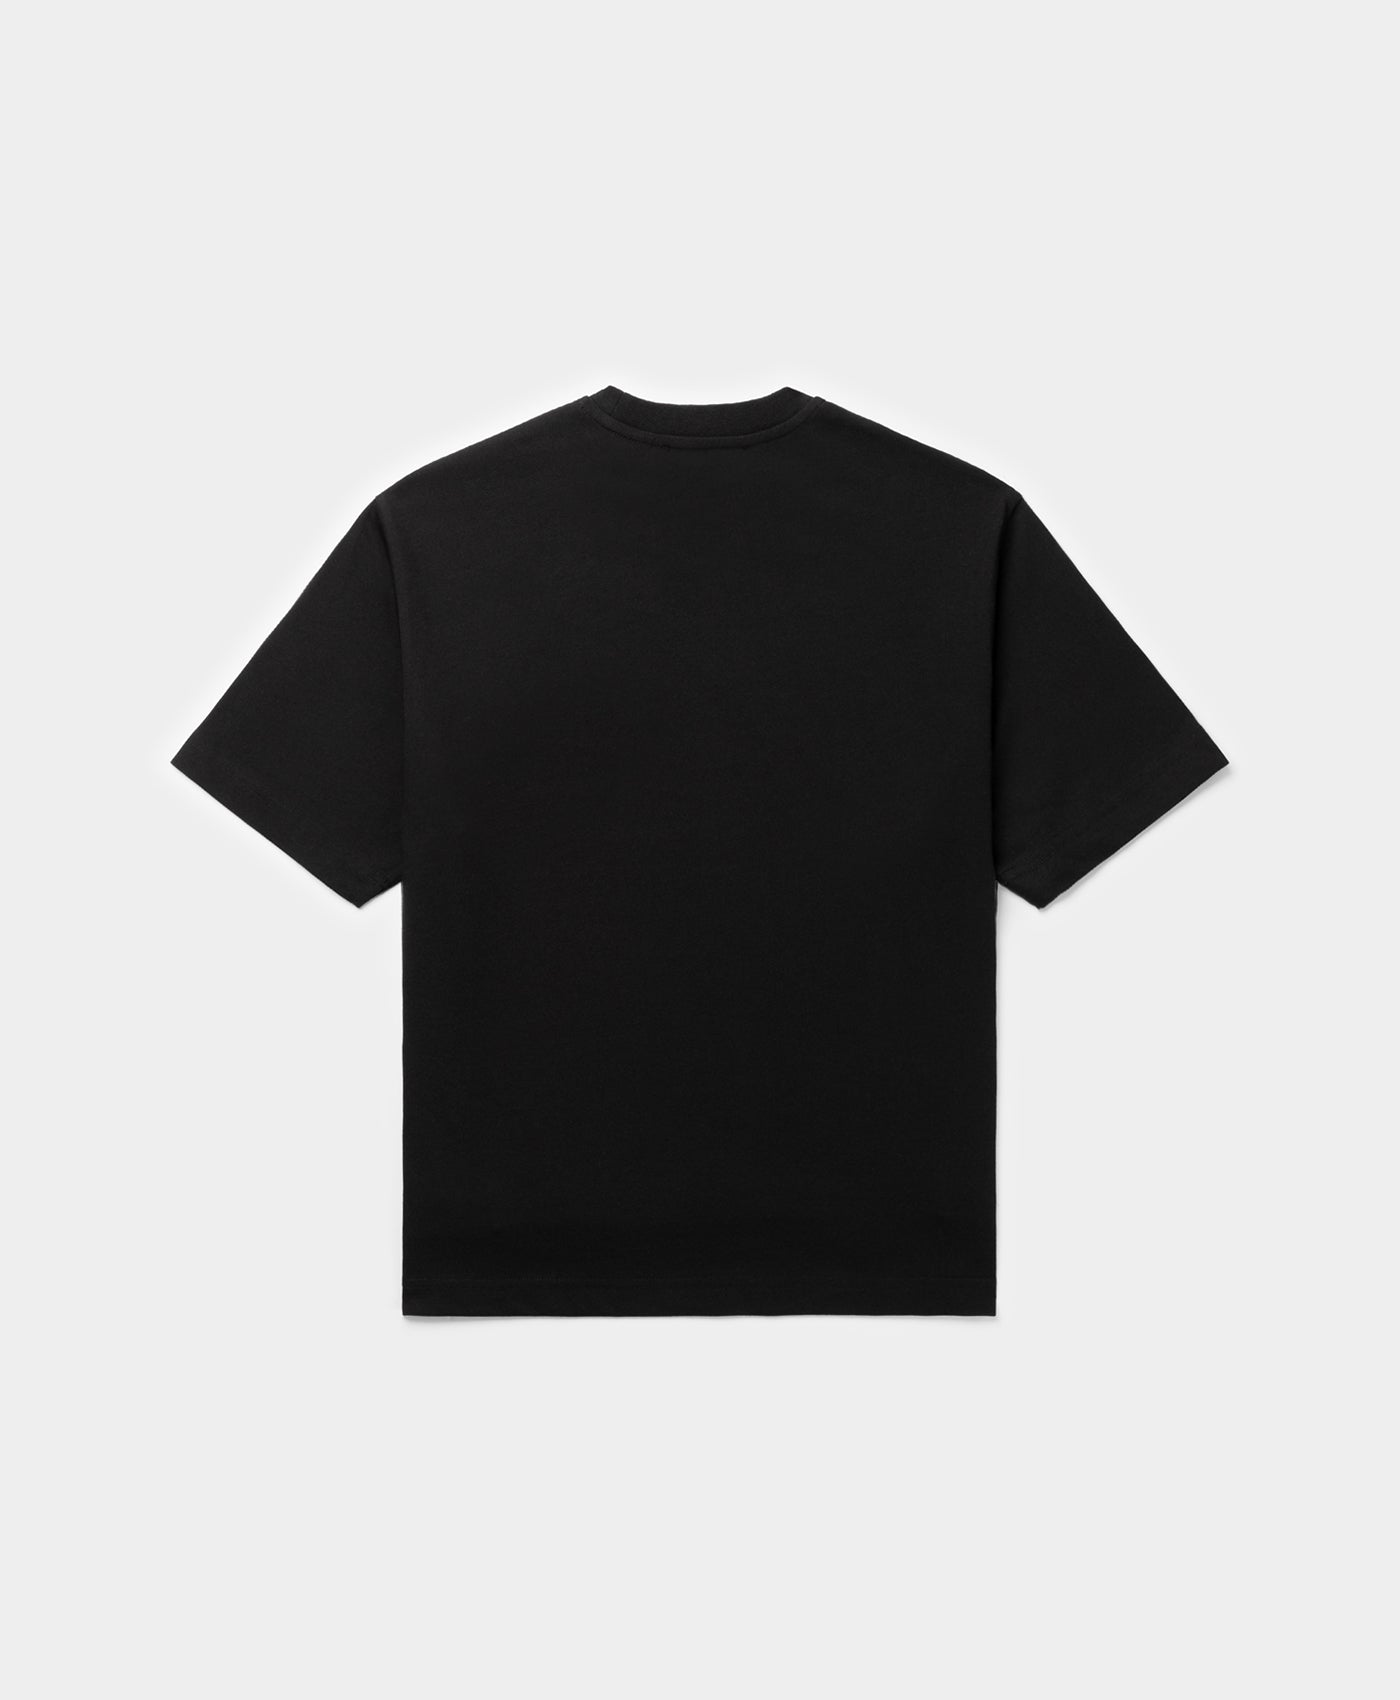 DP - Black Piuza T-Shirt - Packshot - Rear